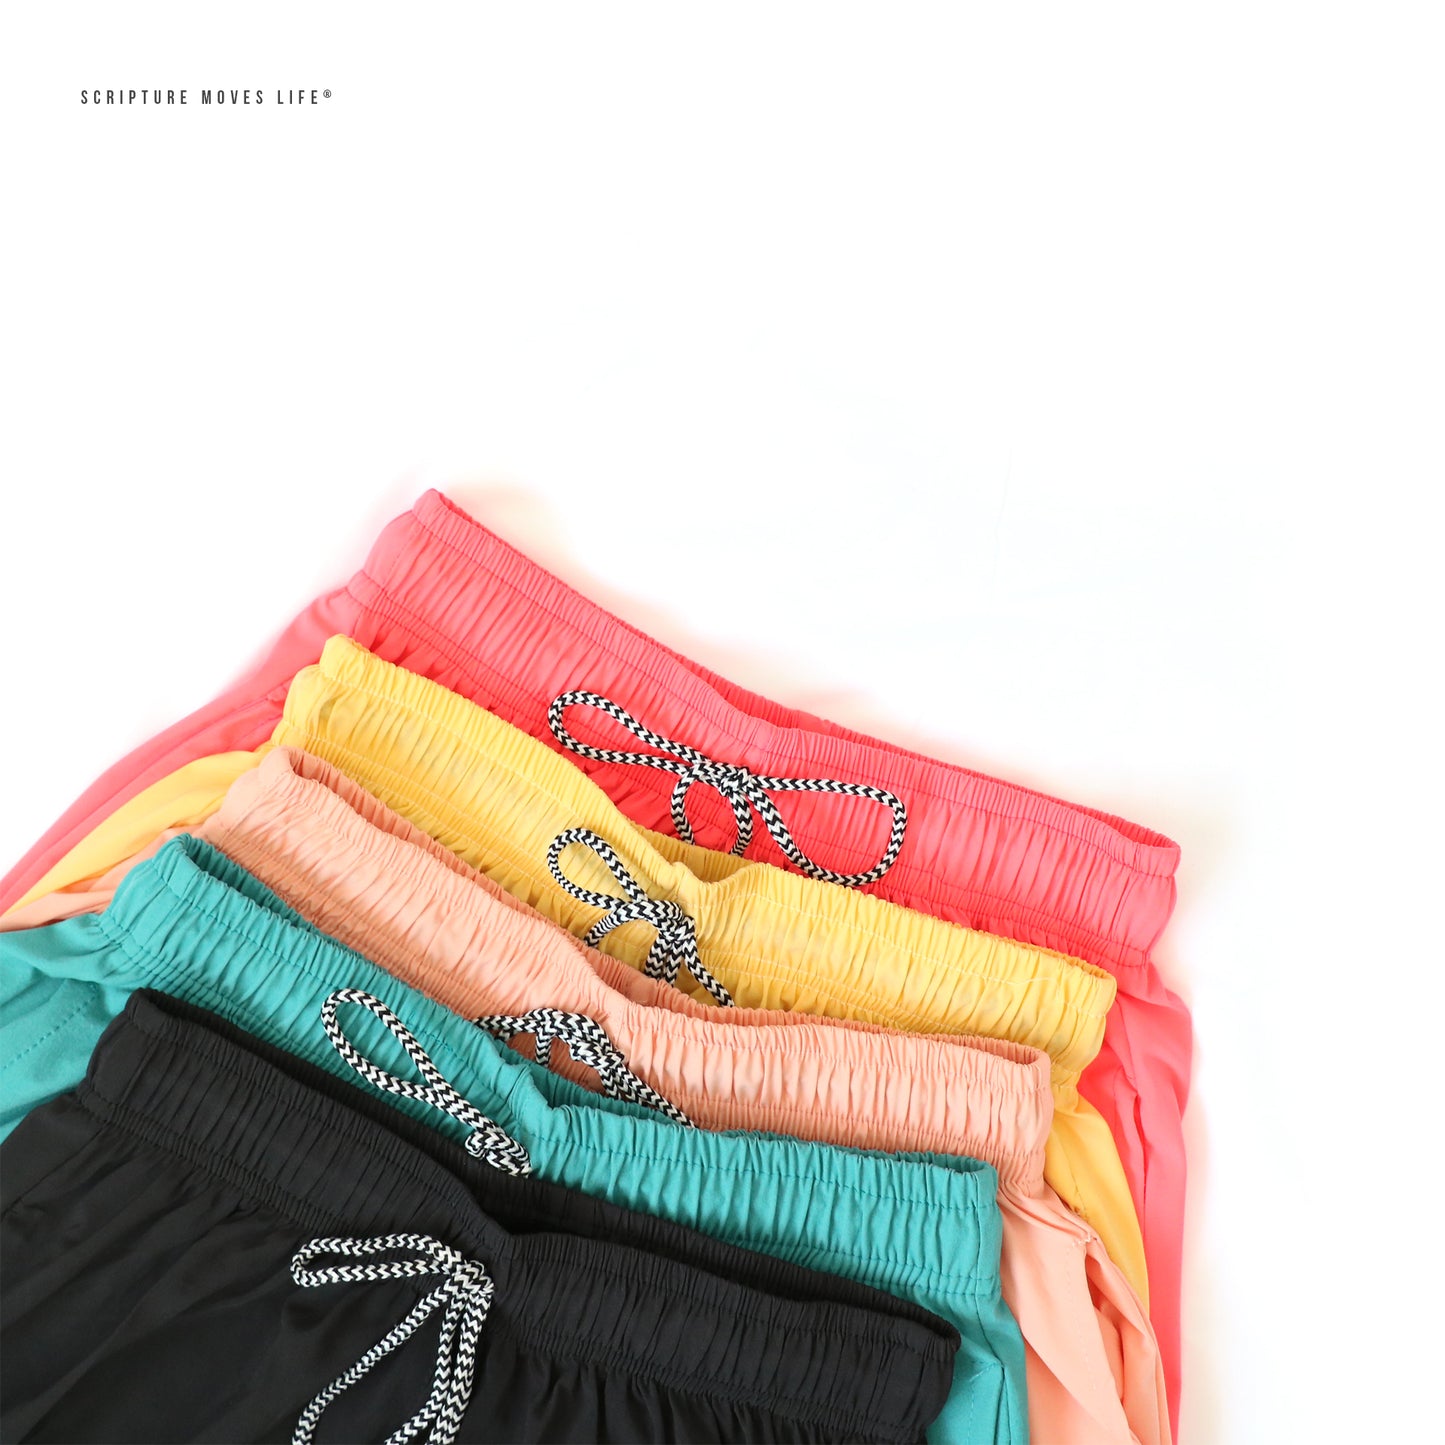 Taslan Shorts-Summer Collection